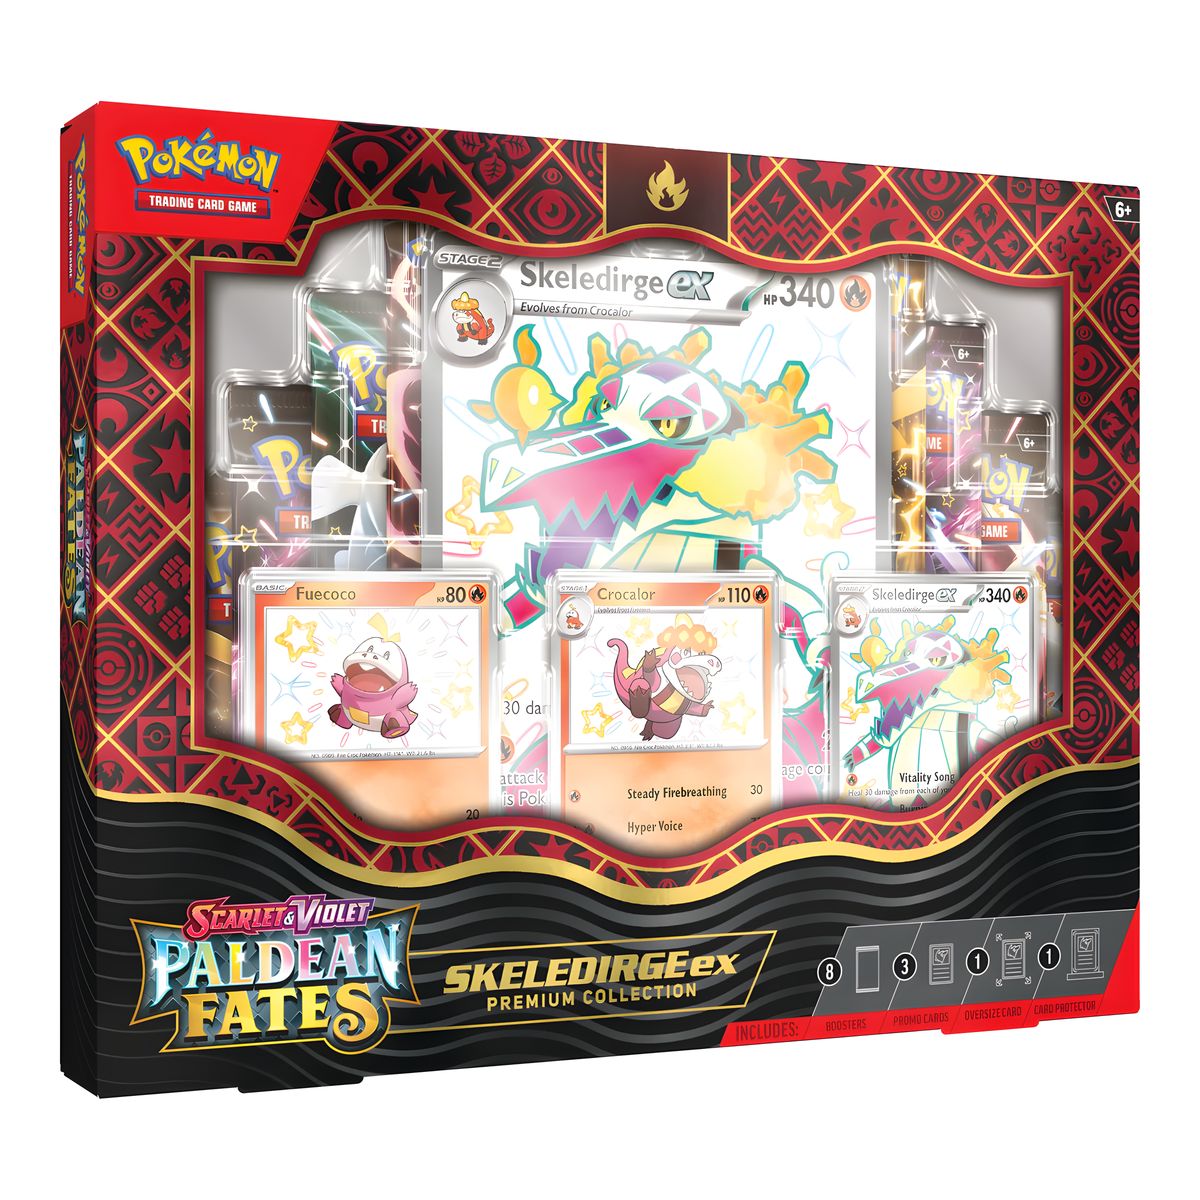 Pokémon - Paldean Fates Premium Collection - Skelidirge